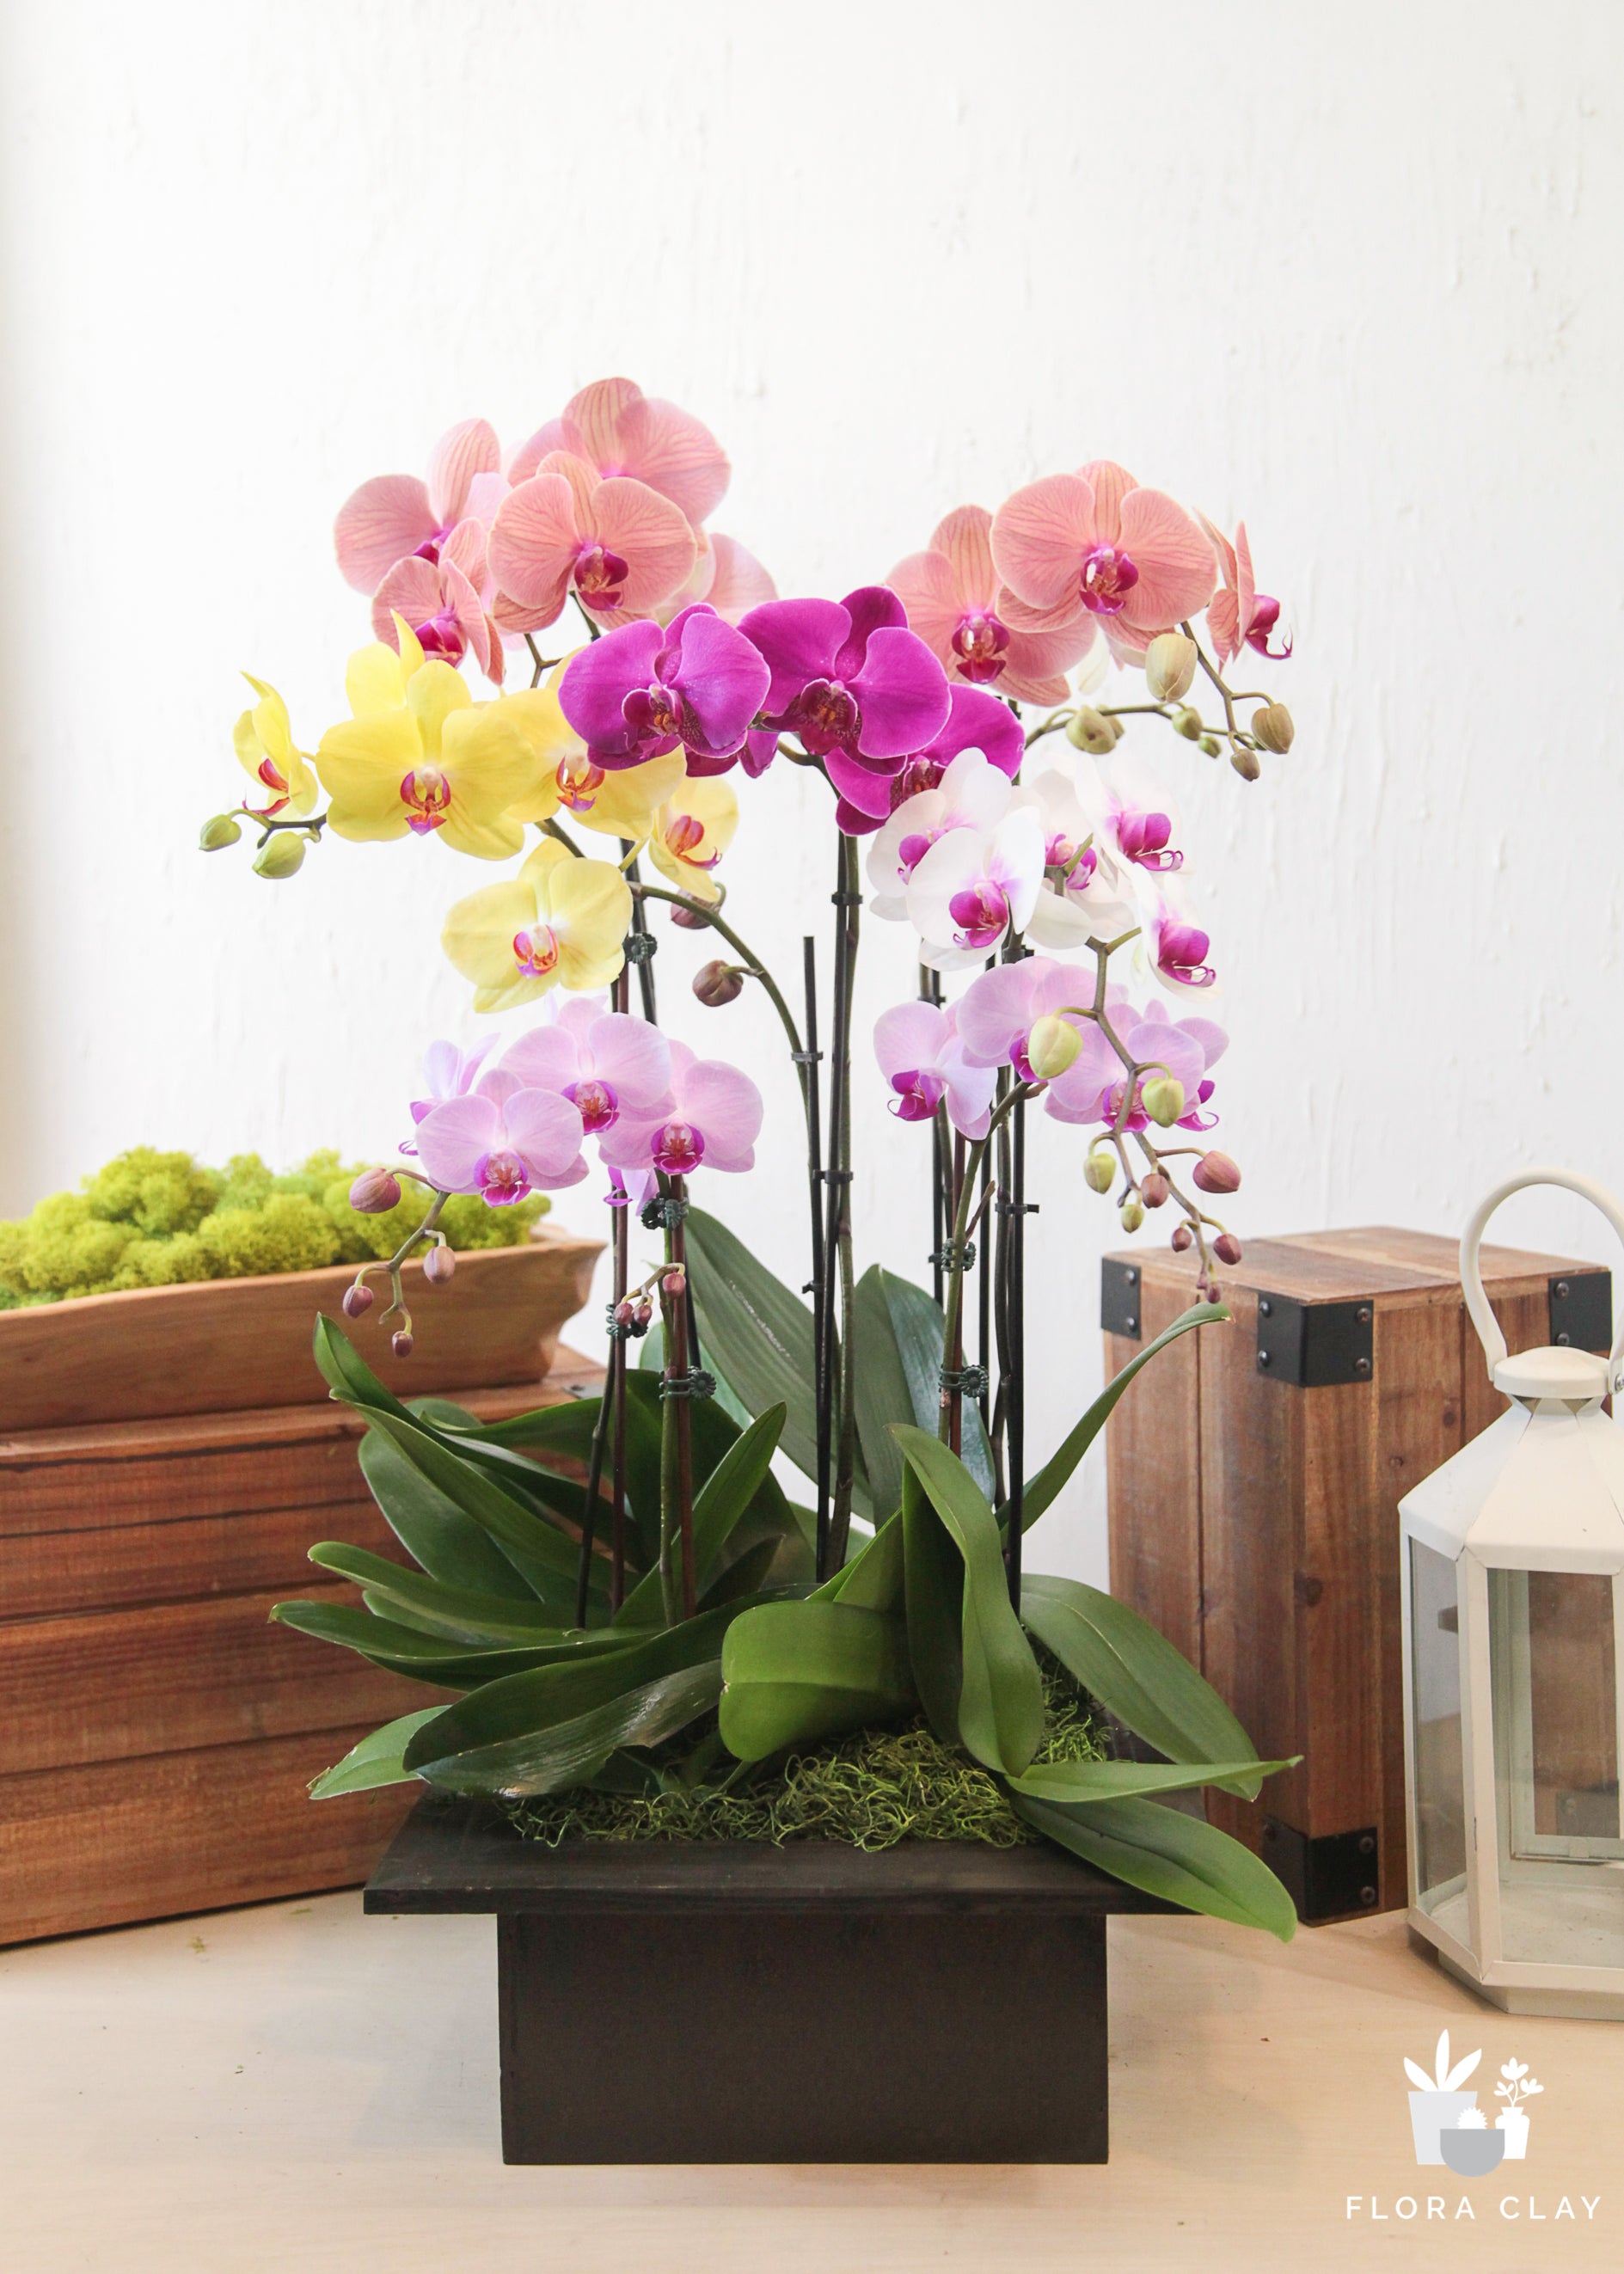 joyful-orchid-floraclay-1.jpg